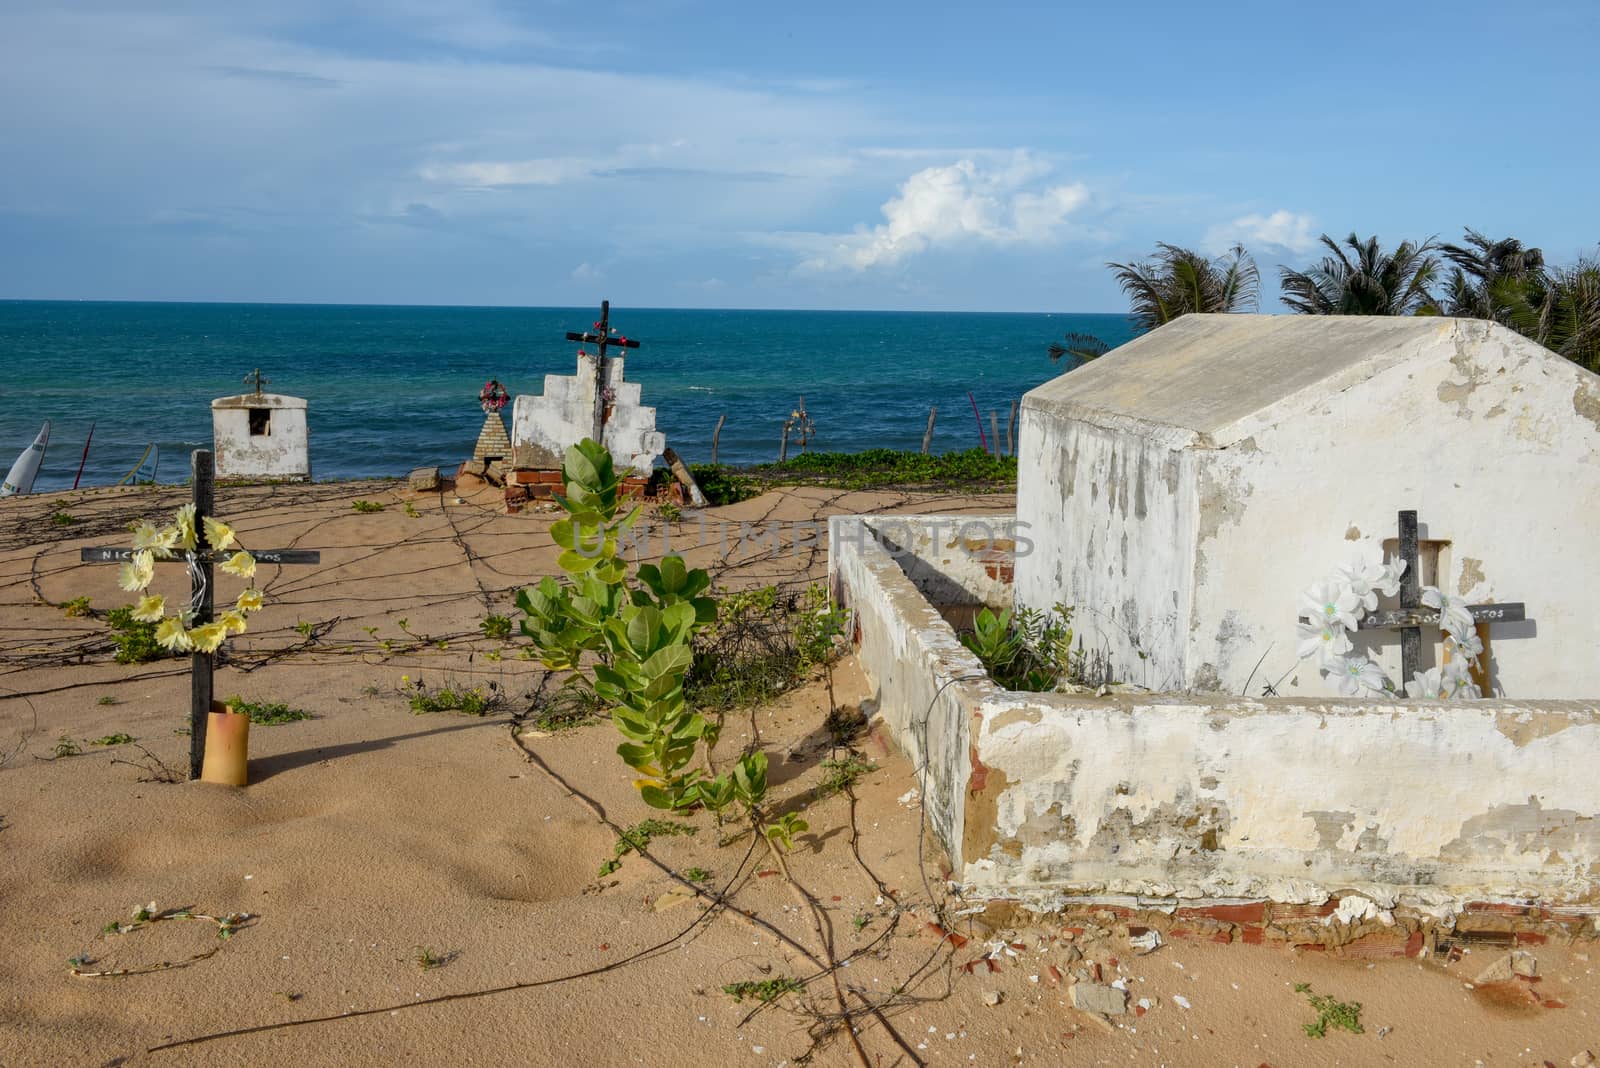 Cemetery on the beach of Canoa Quebrada in Brazil